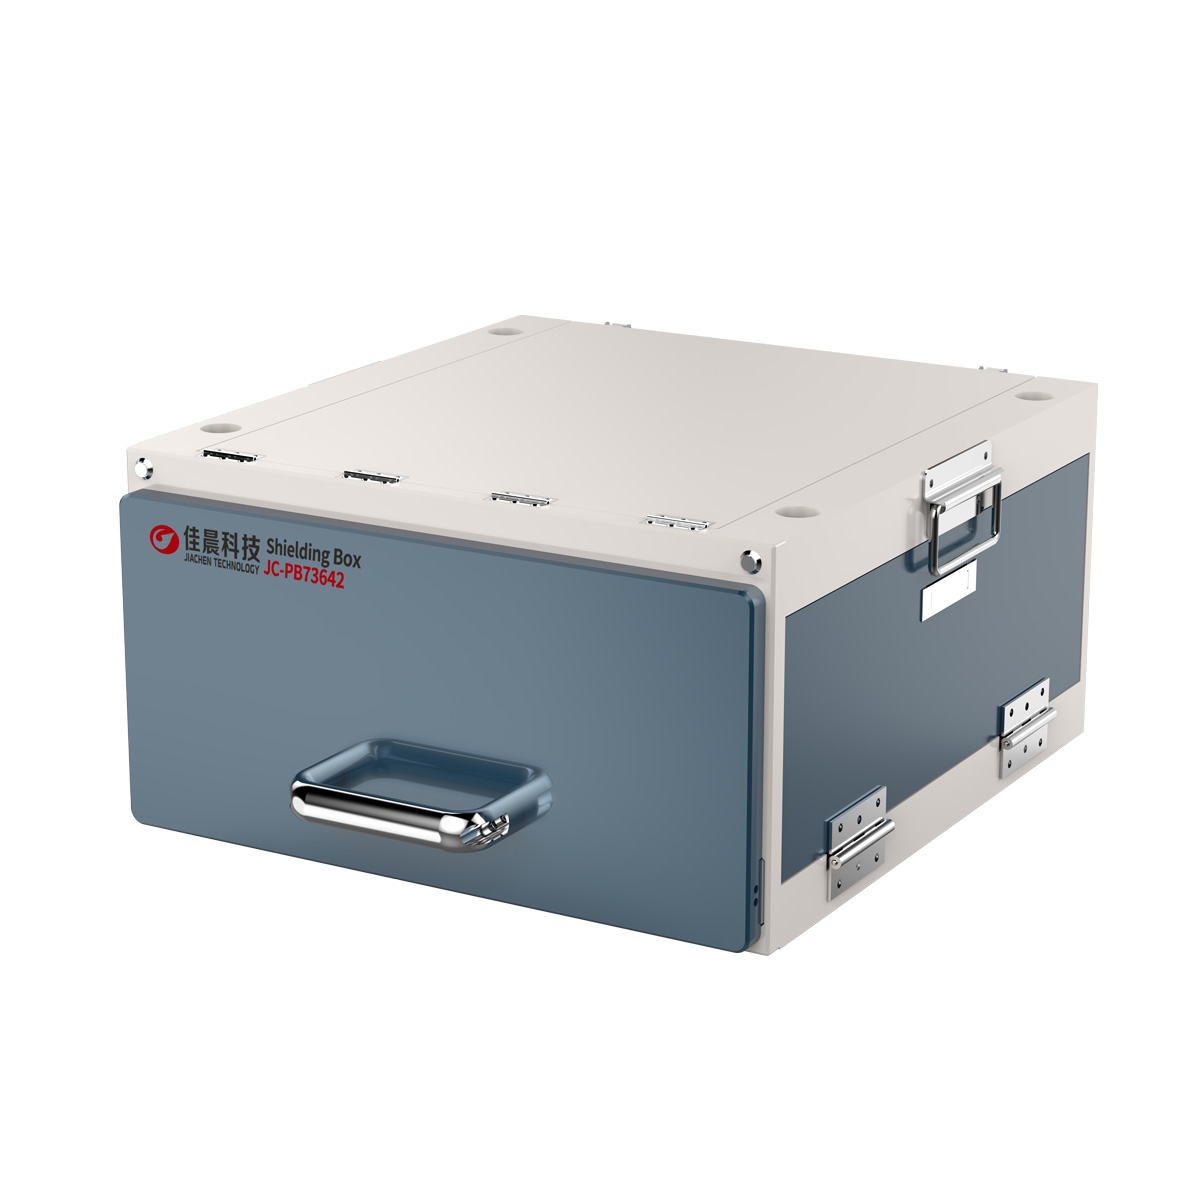 Jc-pb3509 pneumatic drawer type shielding box